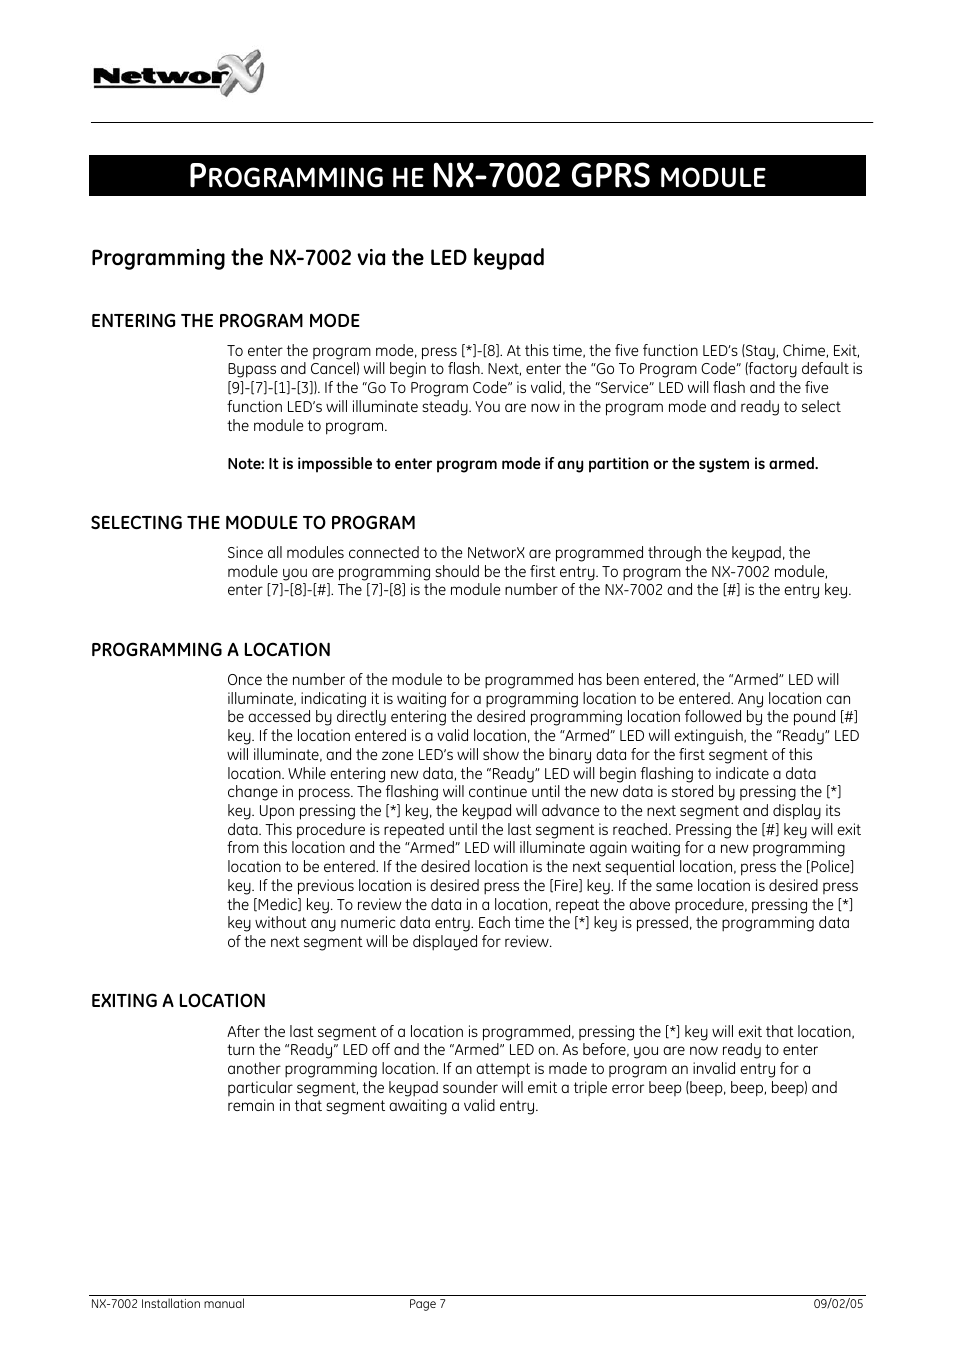 Programming he nx-7002 gprs module, Programming the nx-7002 via the led keypad, Entering the program mode | Selecting the module to program, Programming a location, Exiting a location, Rogramming the, Nx-7002, Via the, Keypad | GE NetworX NX-7002 User Manual | Page 7 / 39